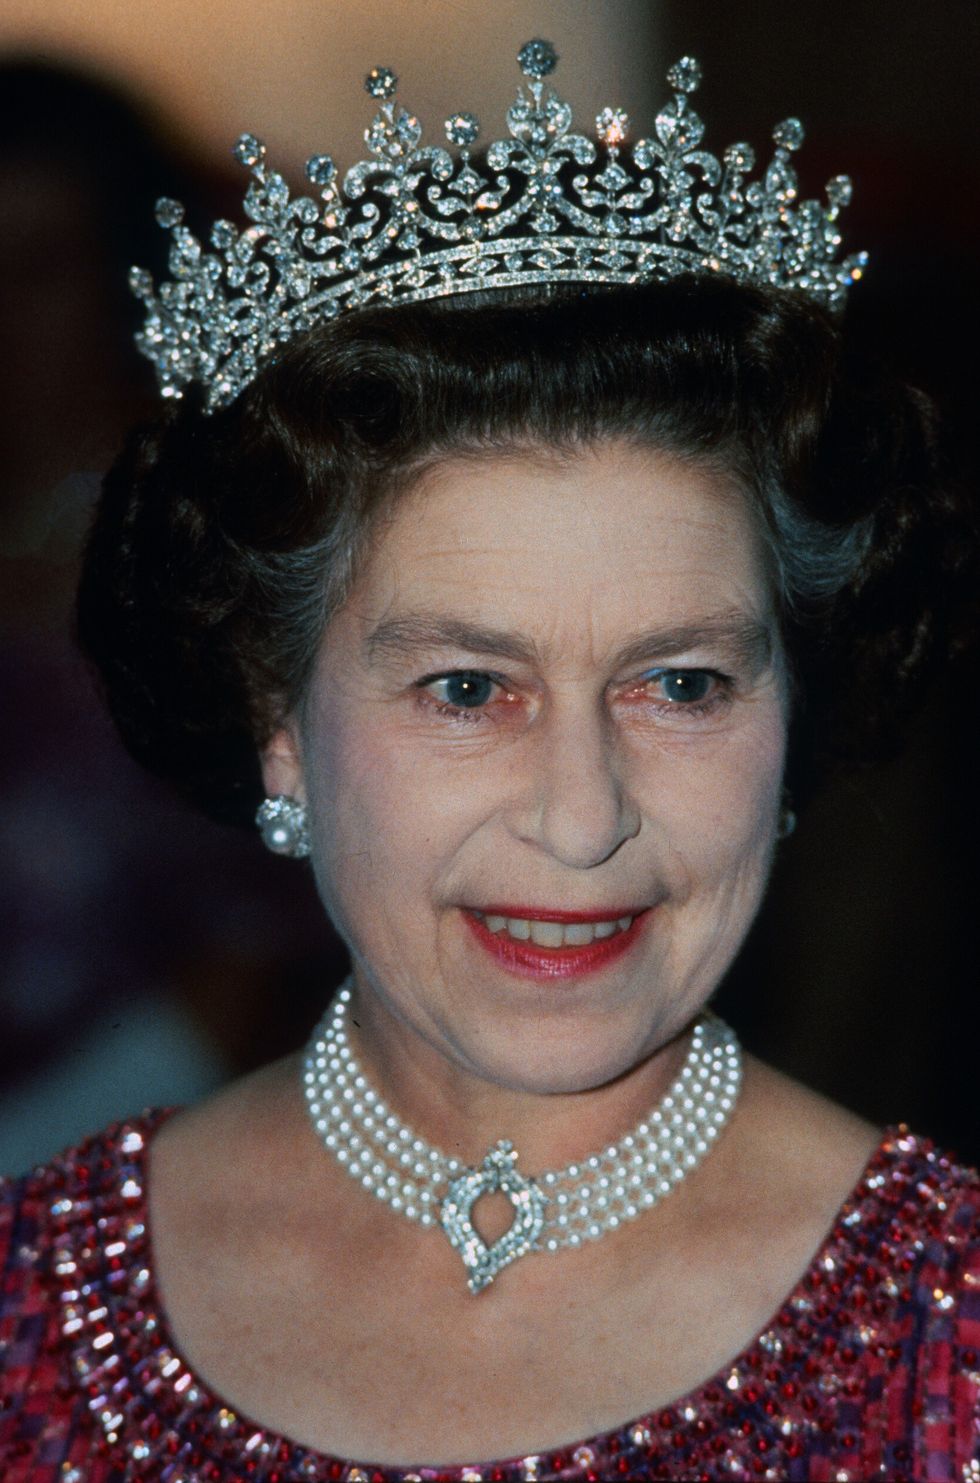 La regina Elisabetta II con una collana di perle